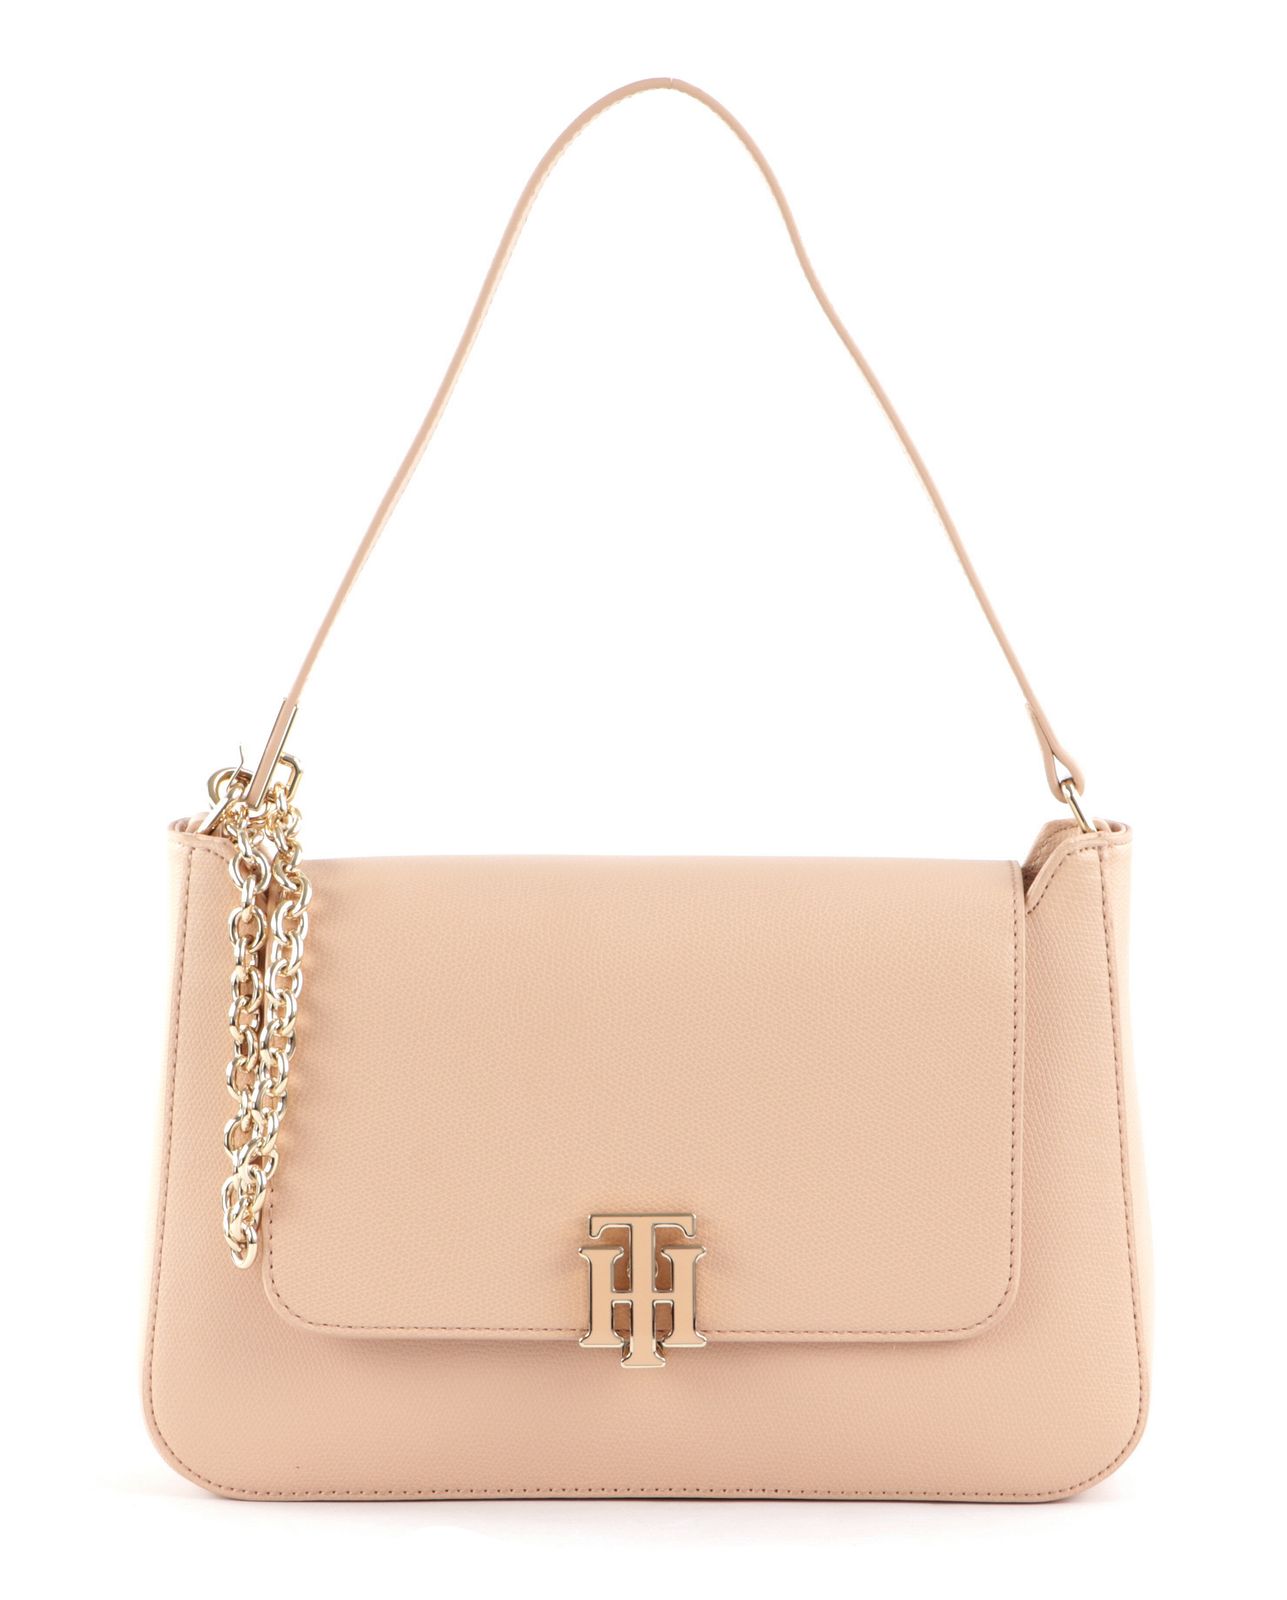 TOMMY HILFIGER Hobo Bag Sandrift | Buy bags, purses & accessories ...